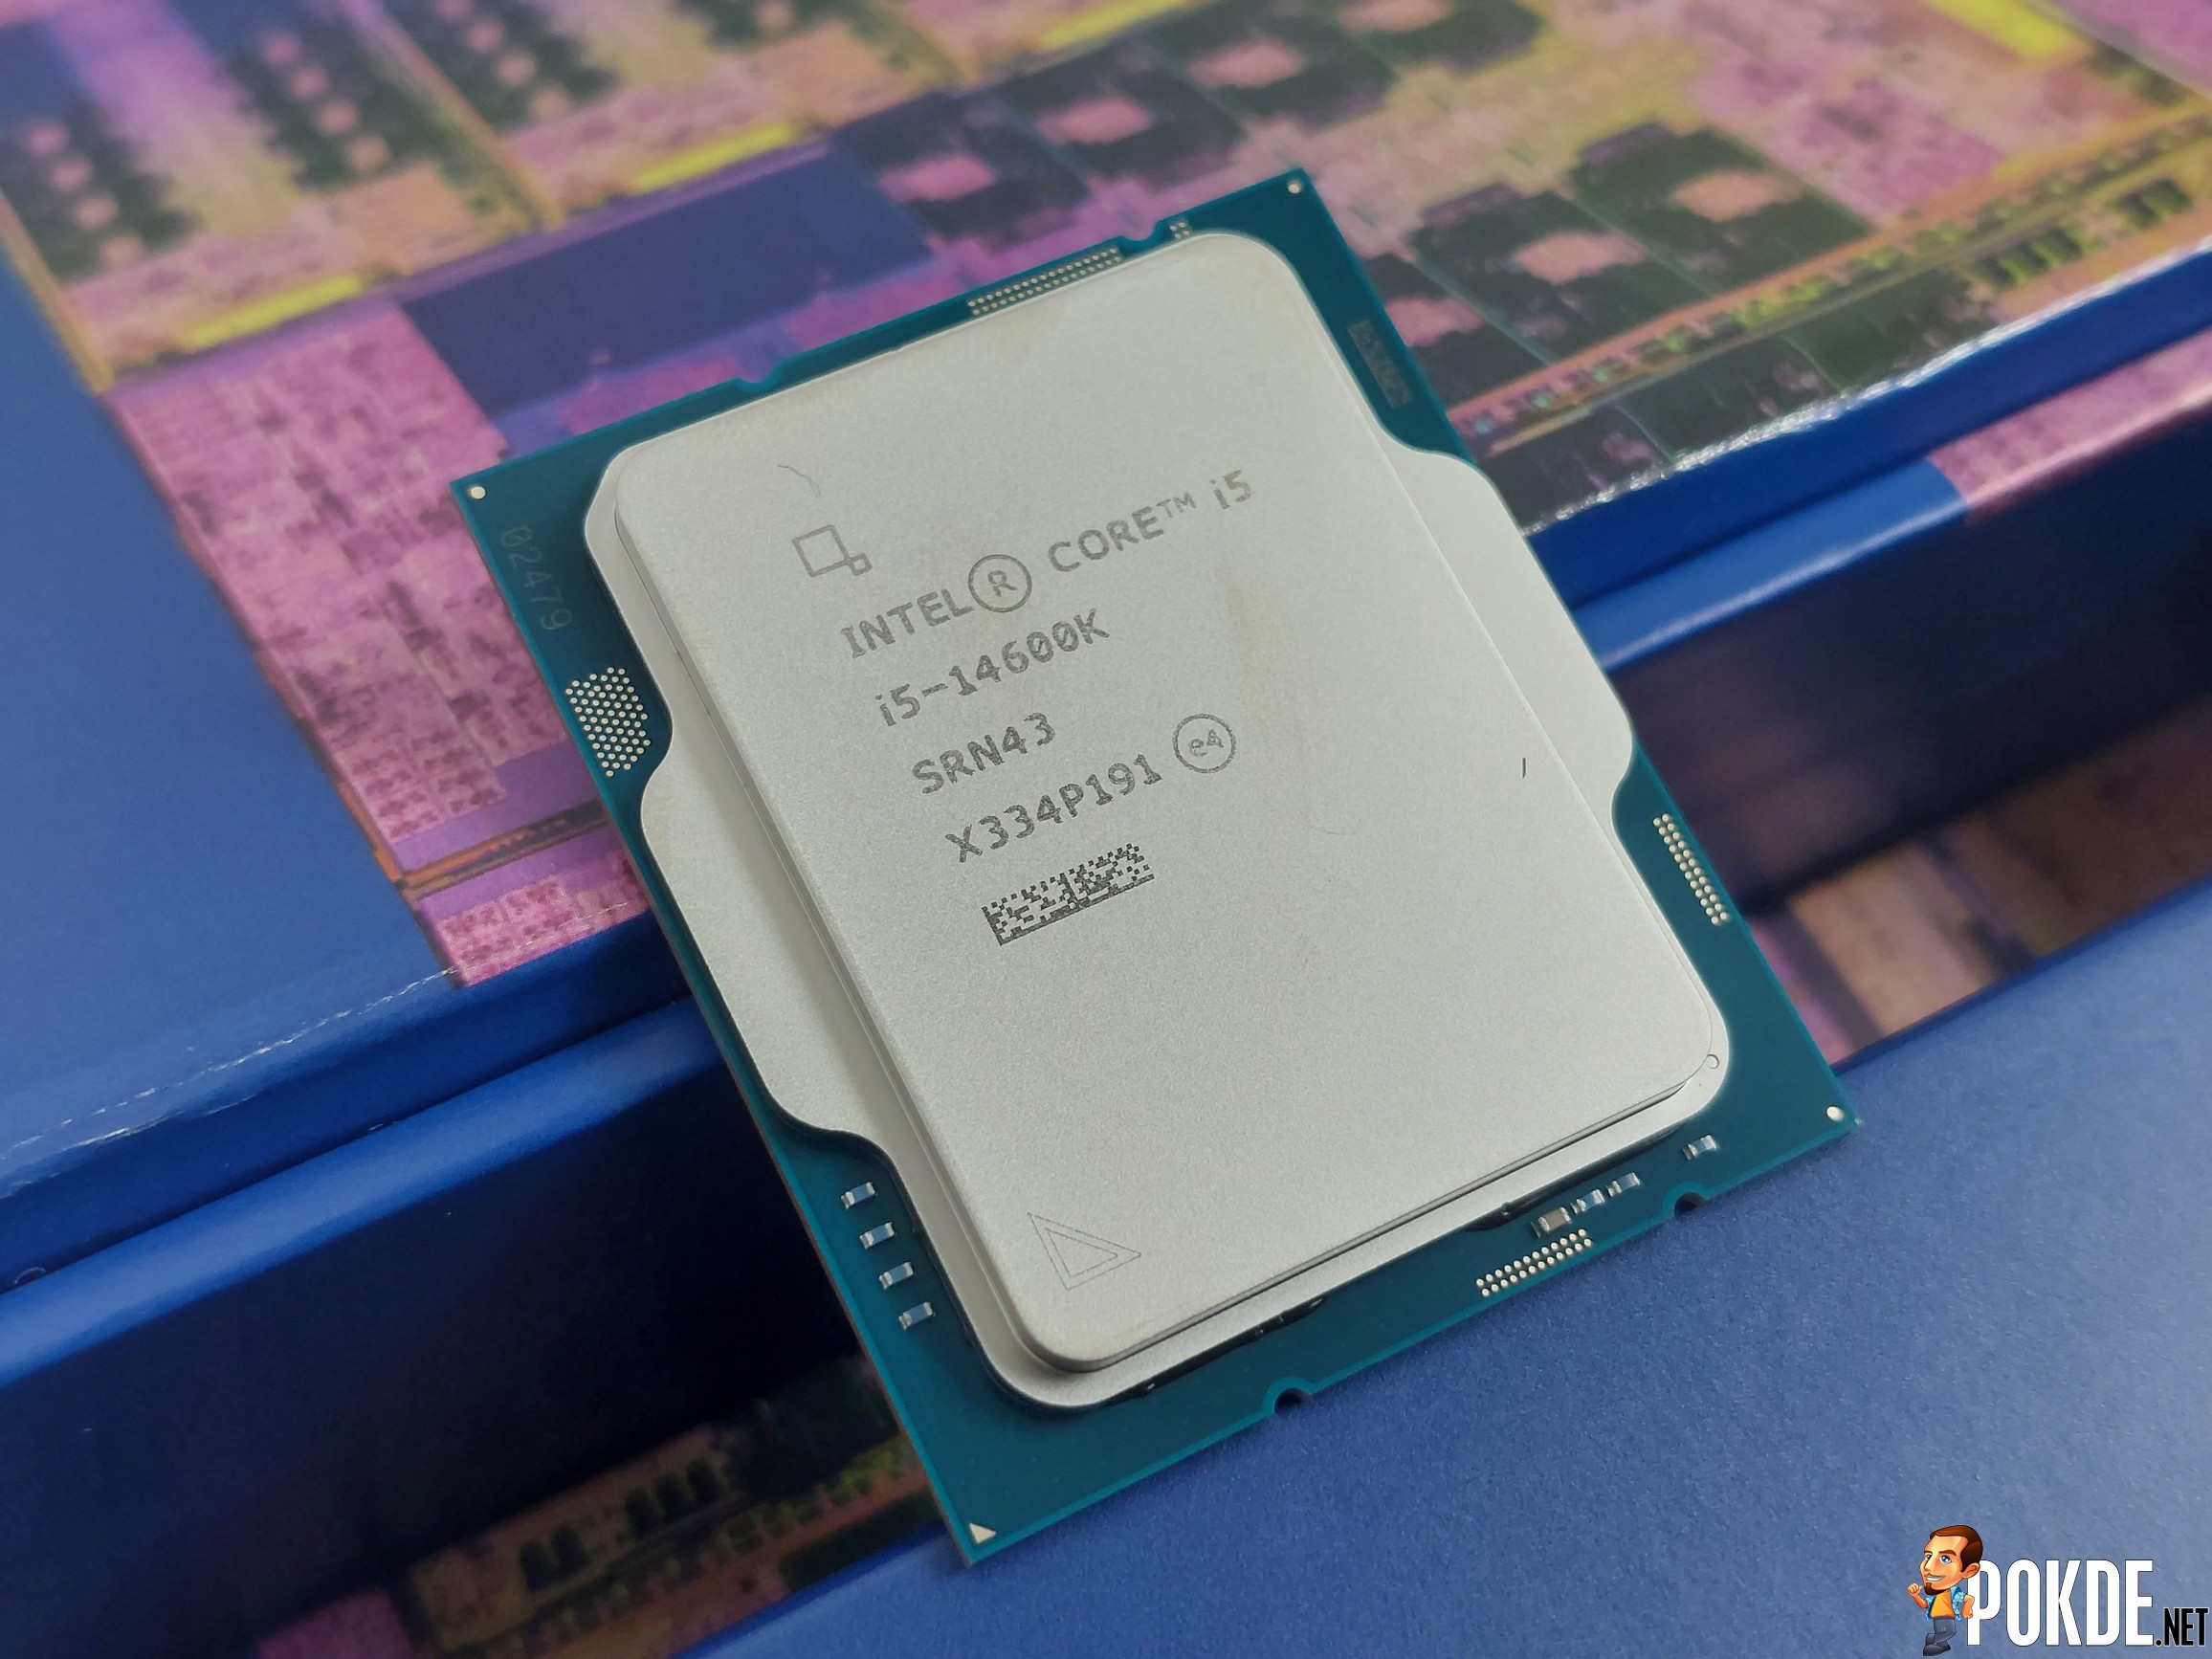 Mid-Range Gaming PC with 14Th Gen Processor - Intel i5 14600K